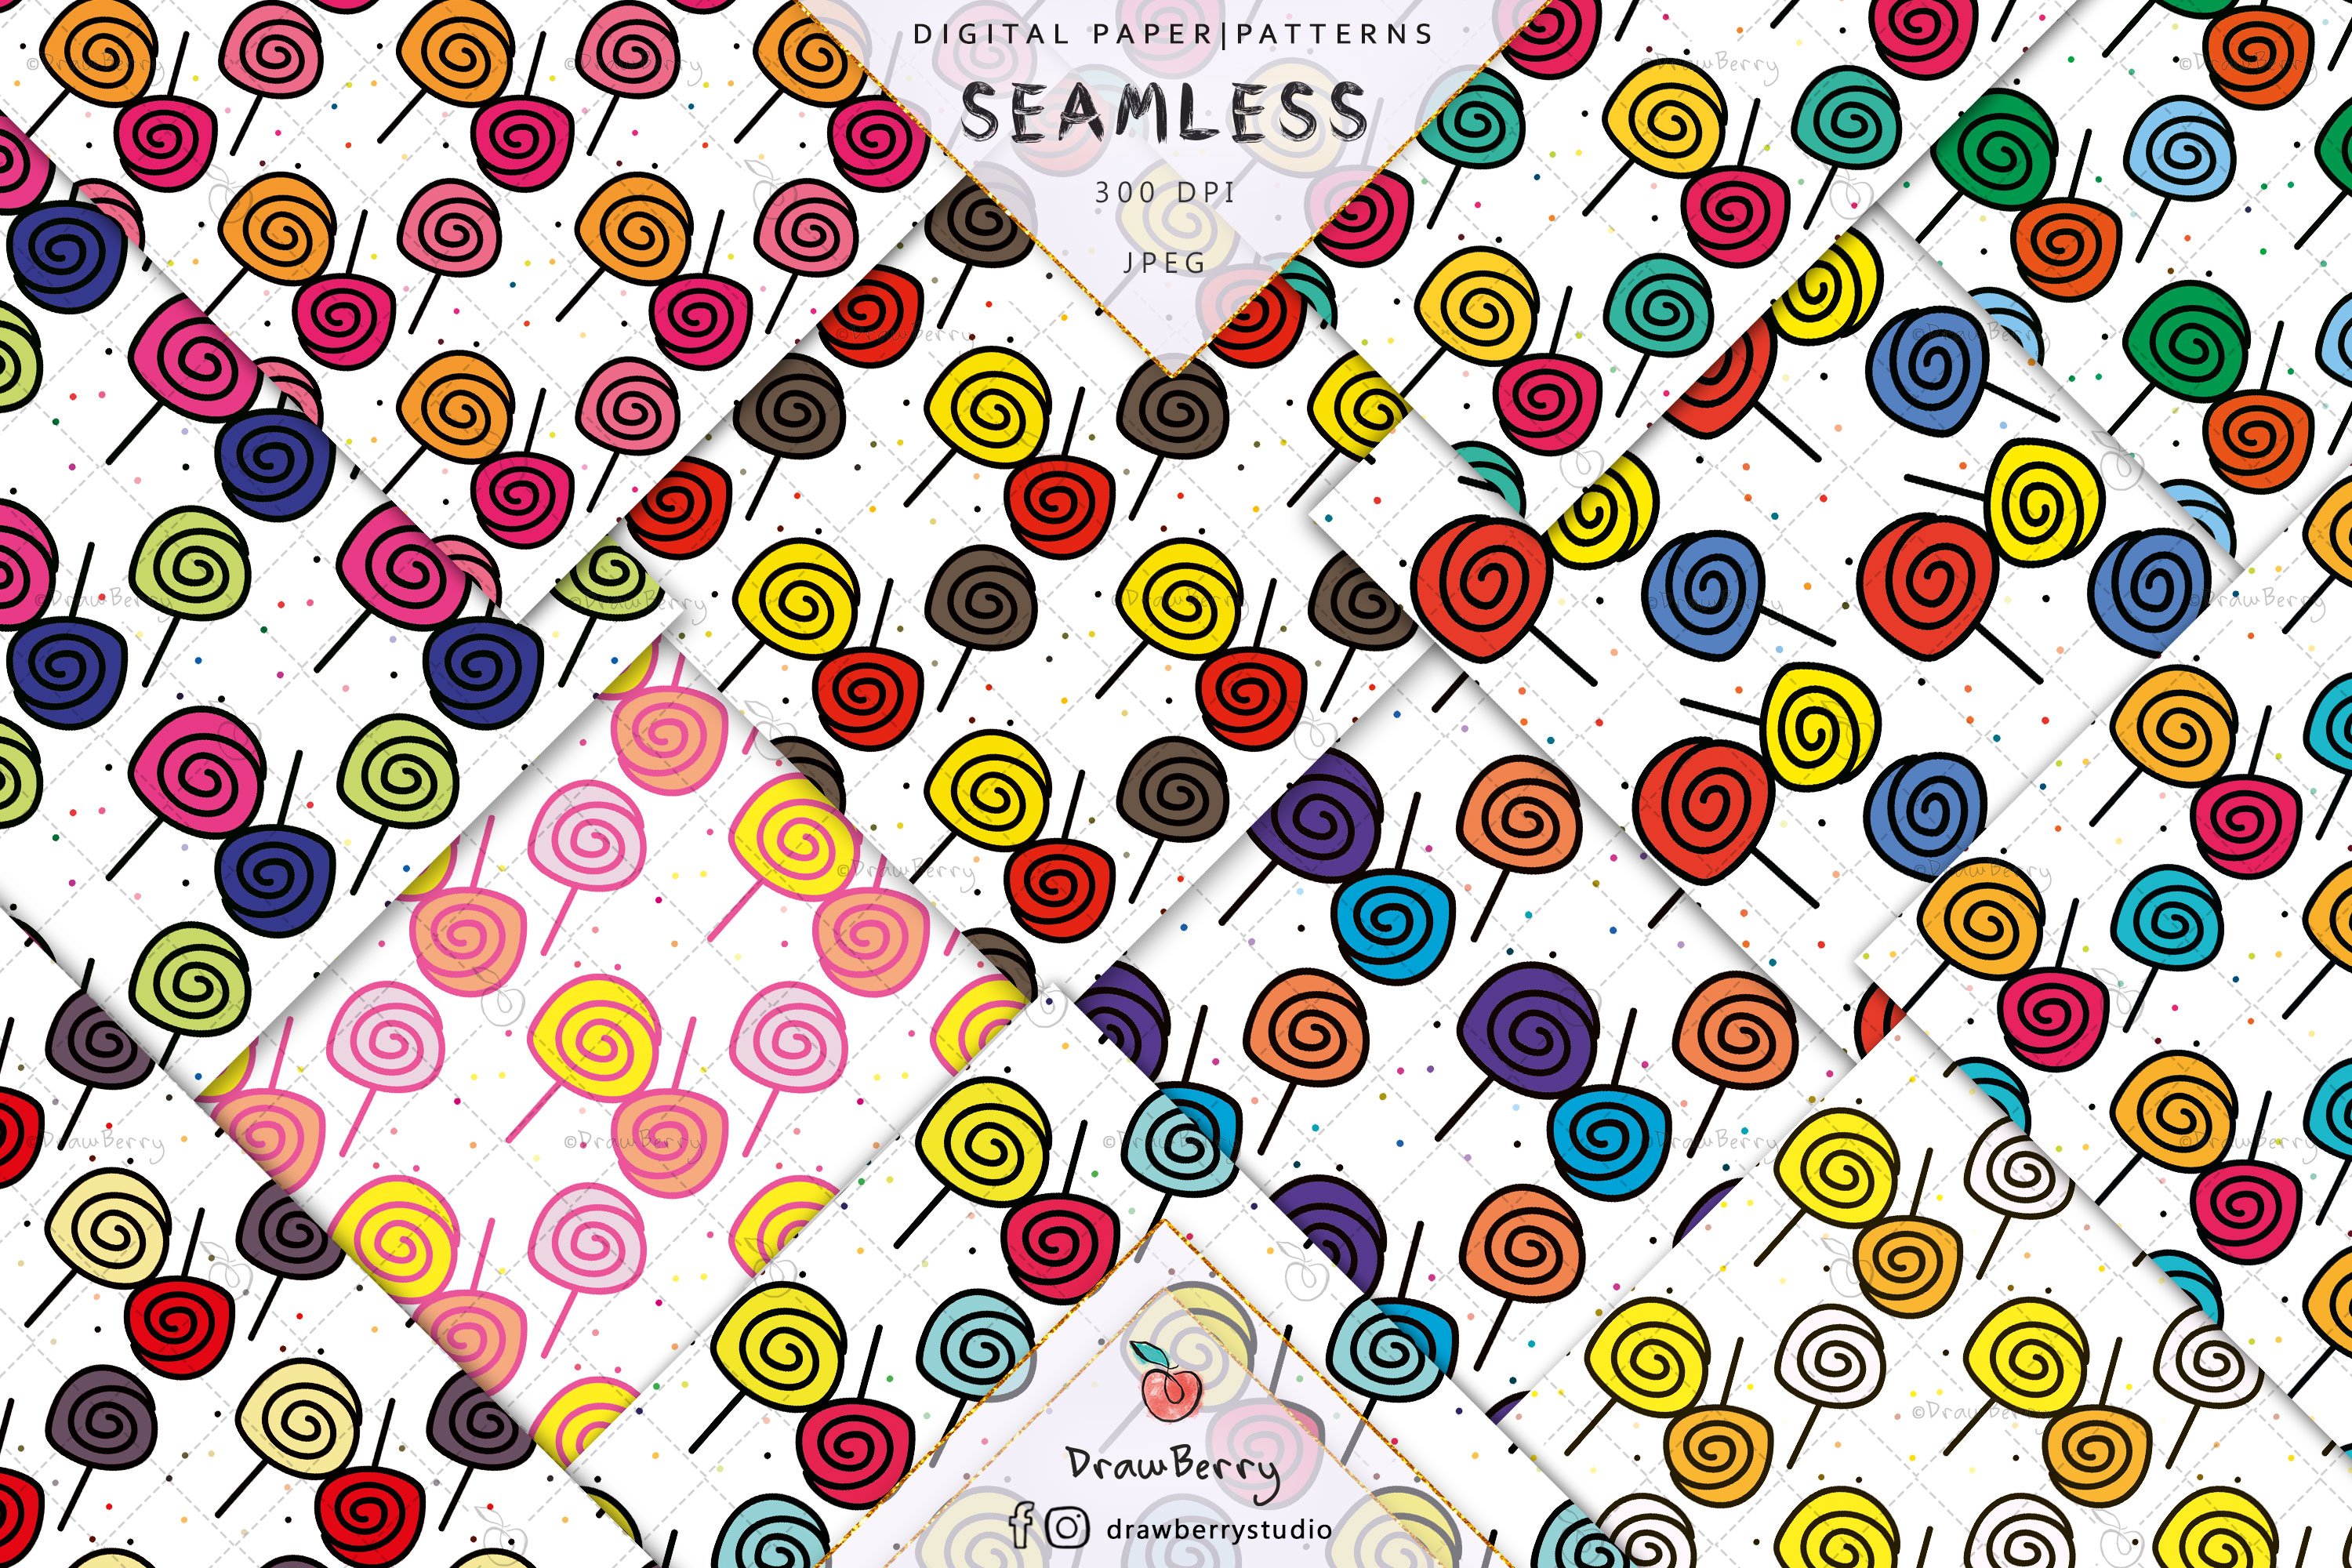 Cute Lollipop Candy Patterns DP092 cover image.